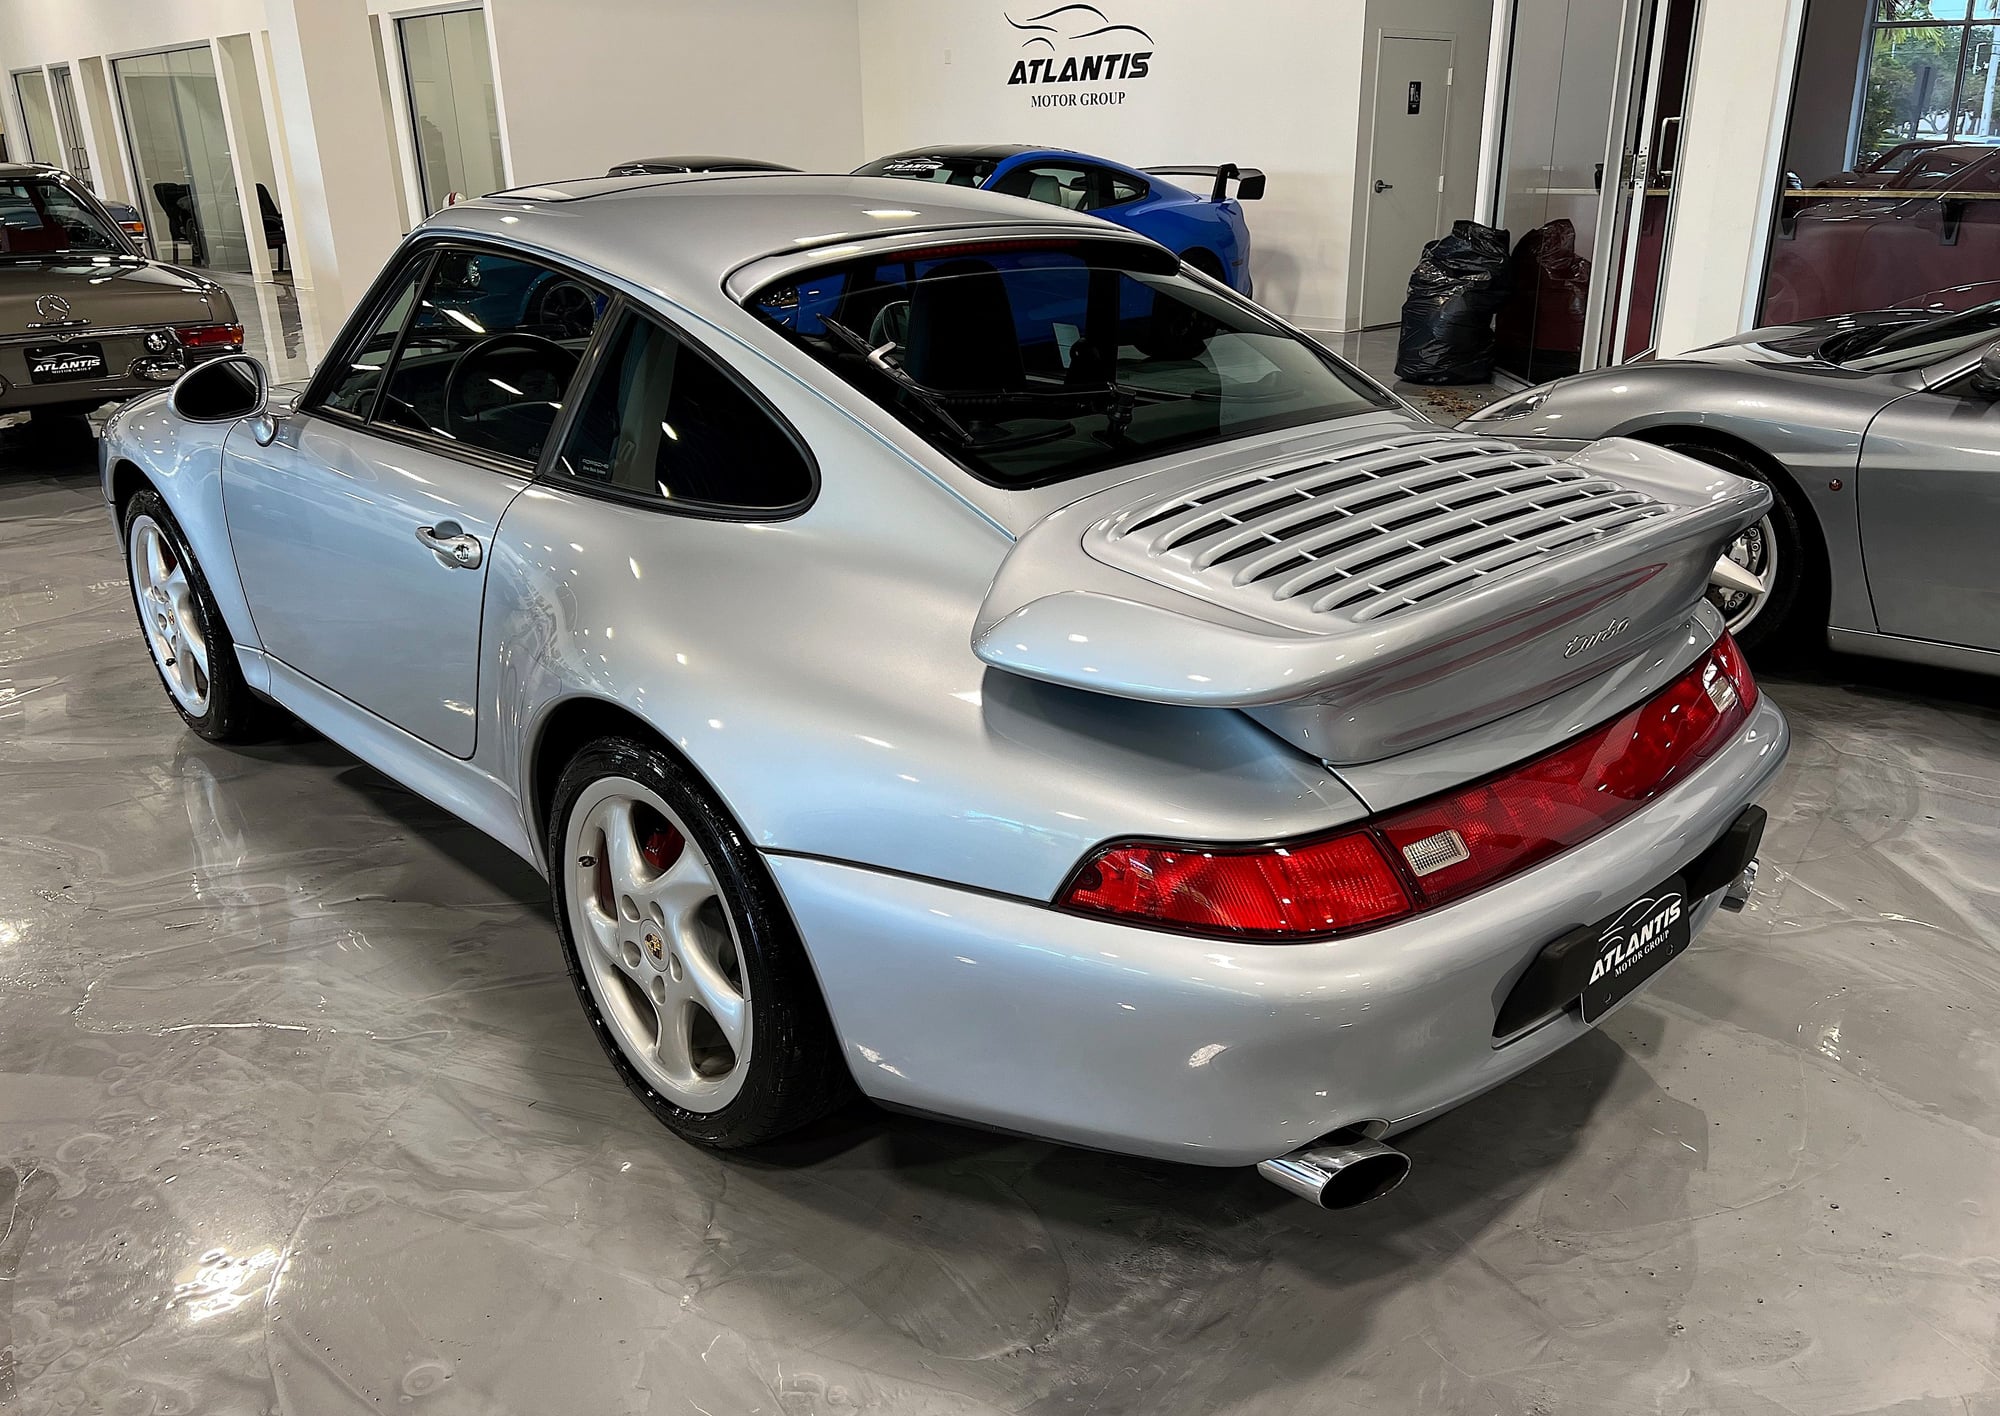 1996 Porsche 911 - 1996 Porsche 993 Turbo with 18,900 miles. - Used - Boca Raton, FL 33431, United States